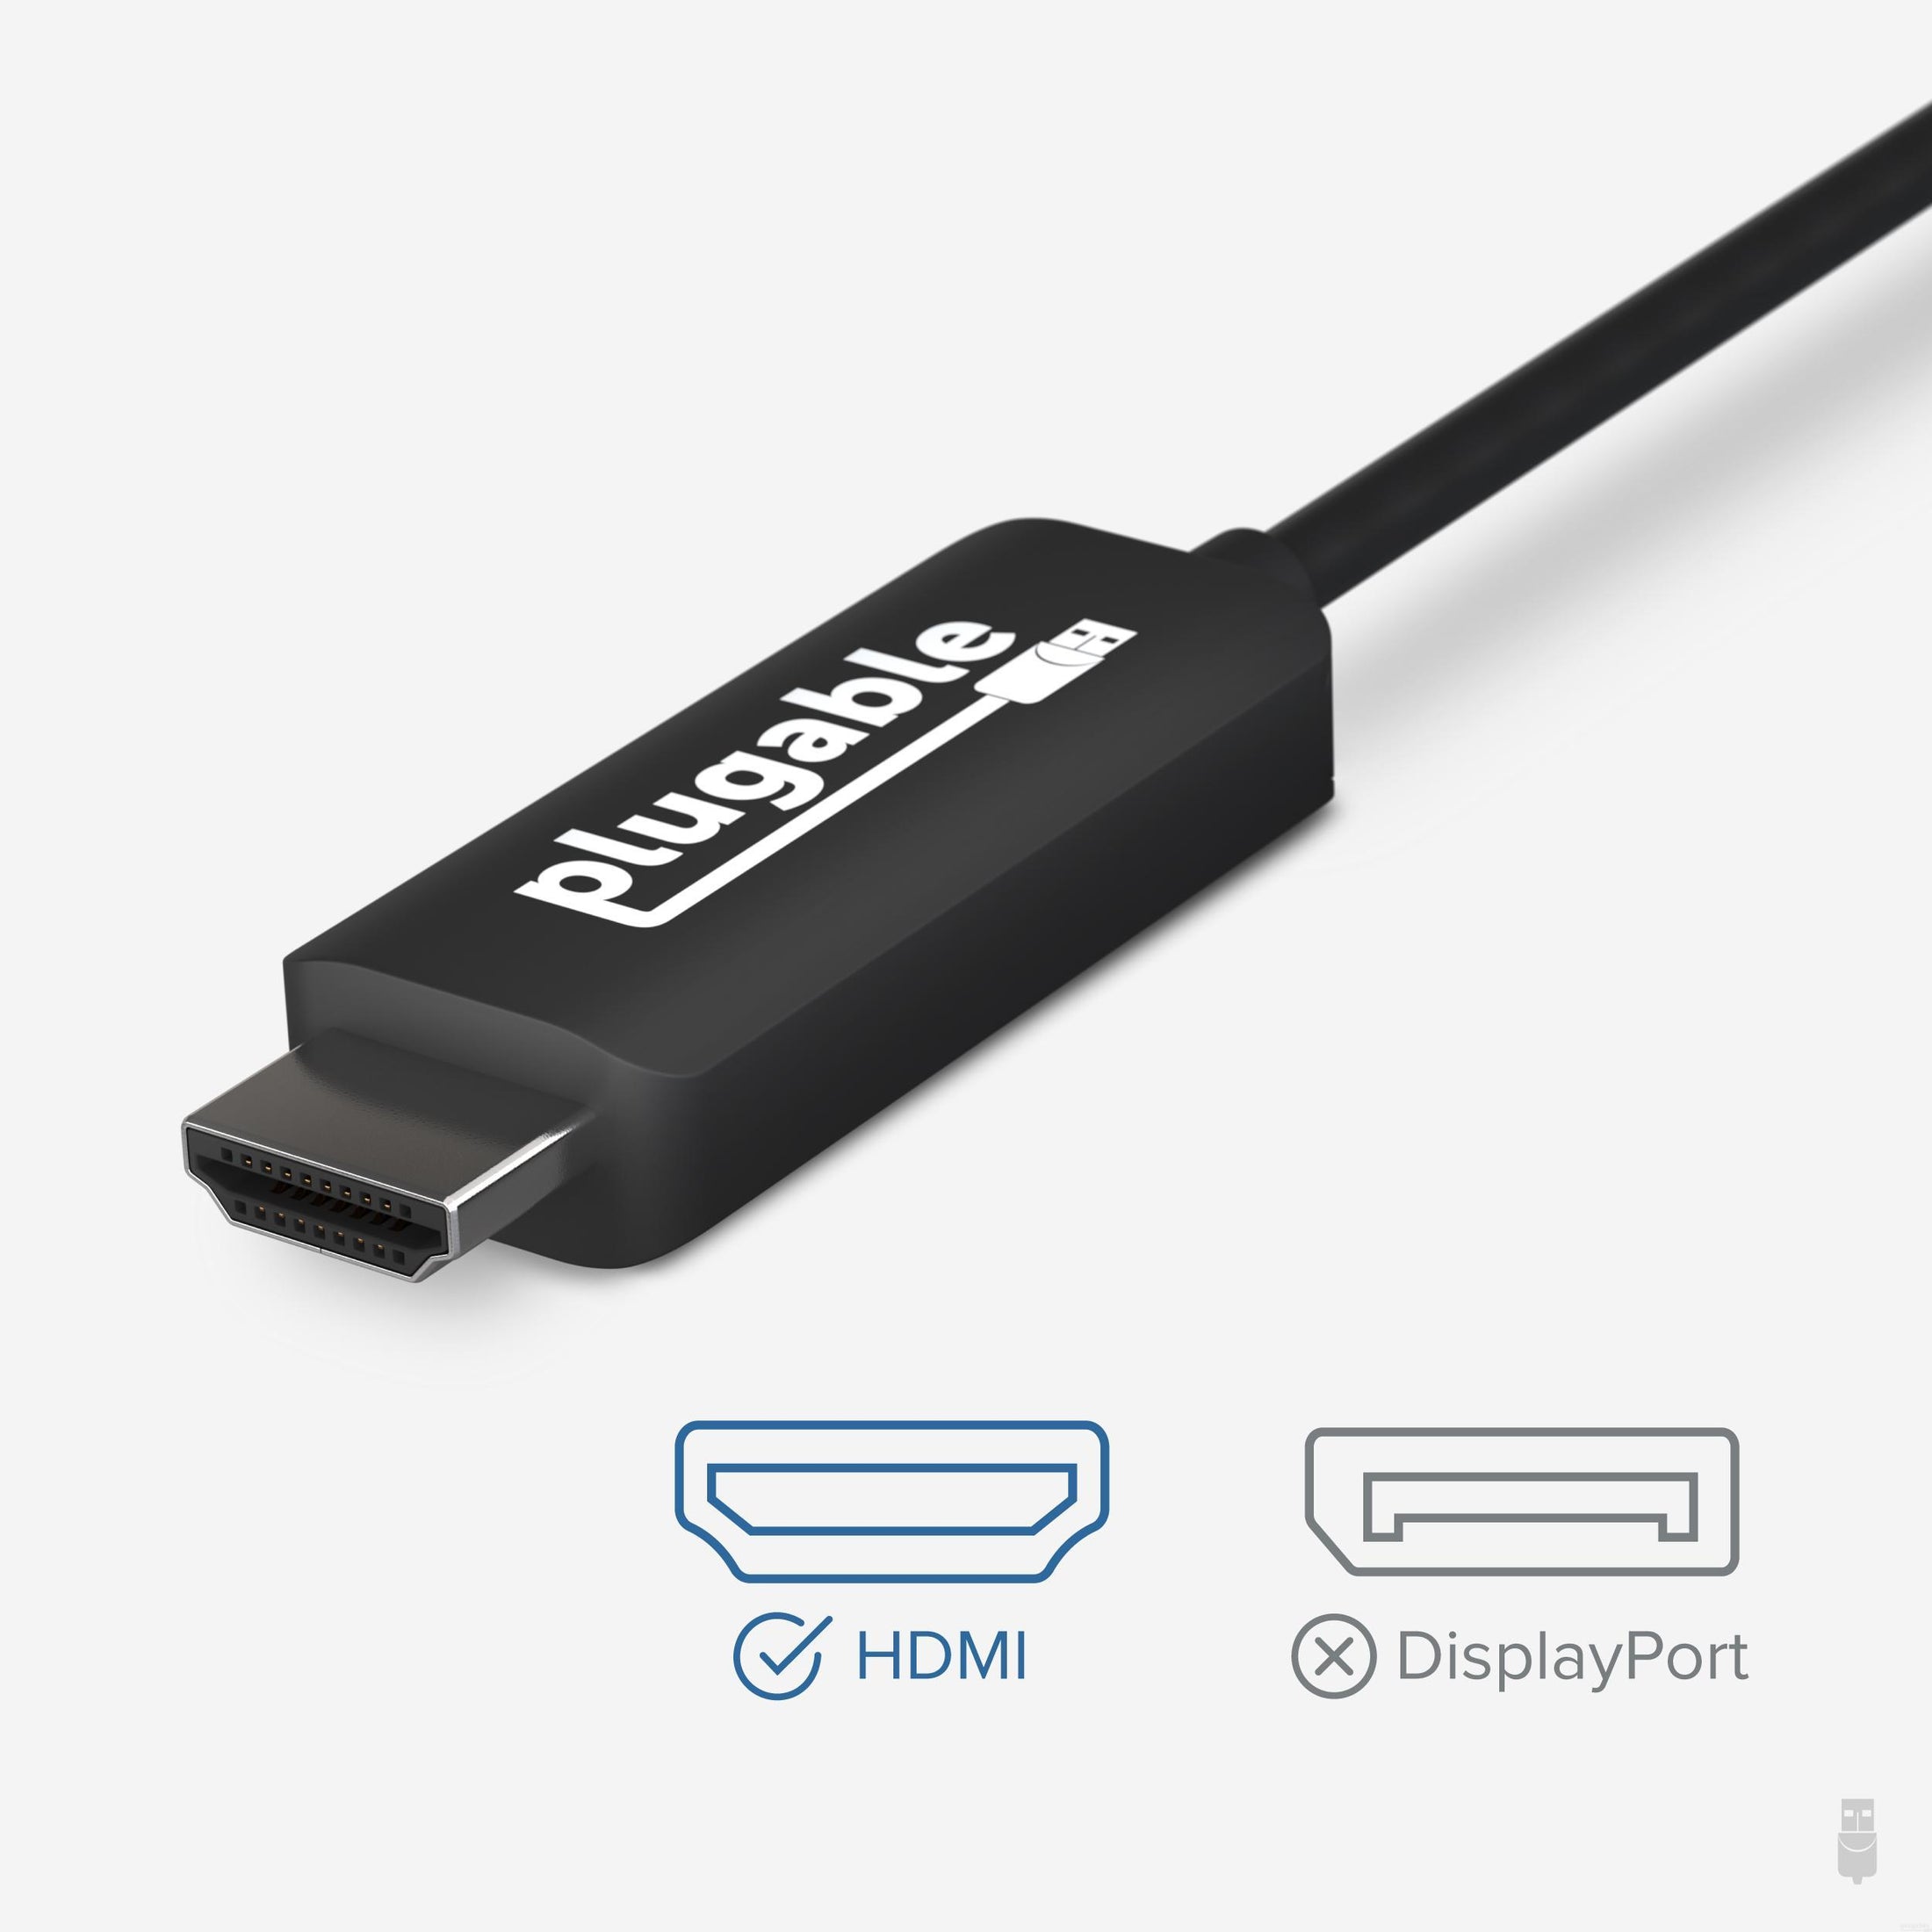  Anker USB C to HDMI Adapter (@60Hz), 310 USB-C (4K HDMI),  Aluminum, Portable, for MacBook Pro, Air, iPad pROPixelbook, XPS, Galaxy,  and More : Electronics